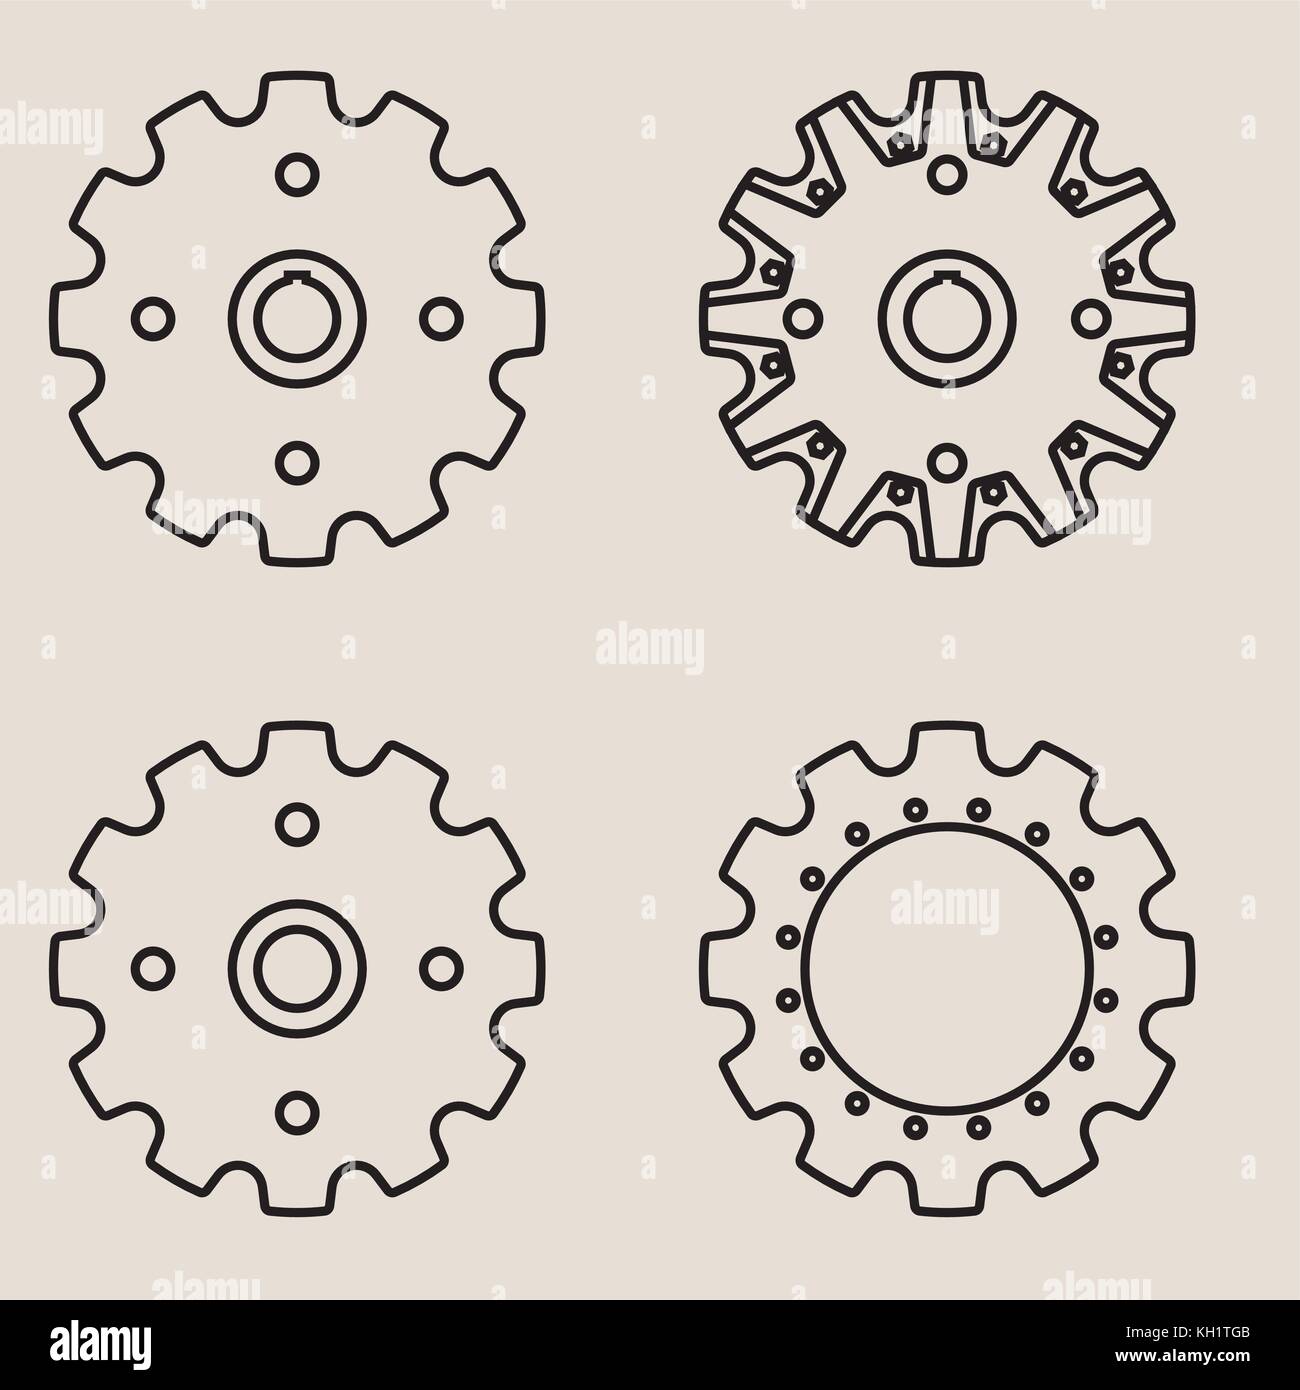 Ritzel und Rad Vector Icons Stock-Vektorgrafik - Alamy